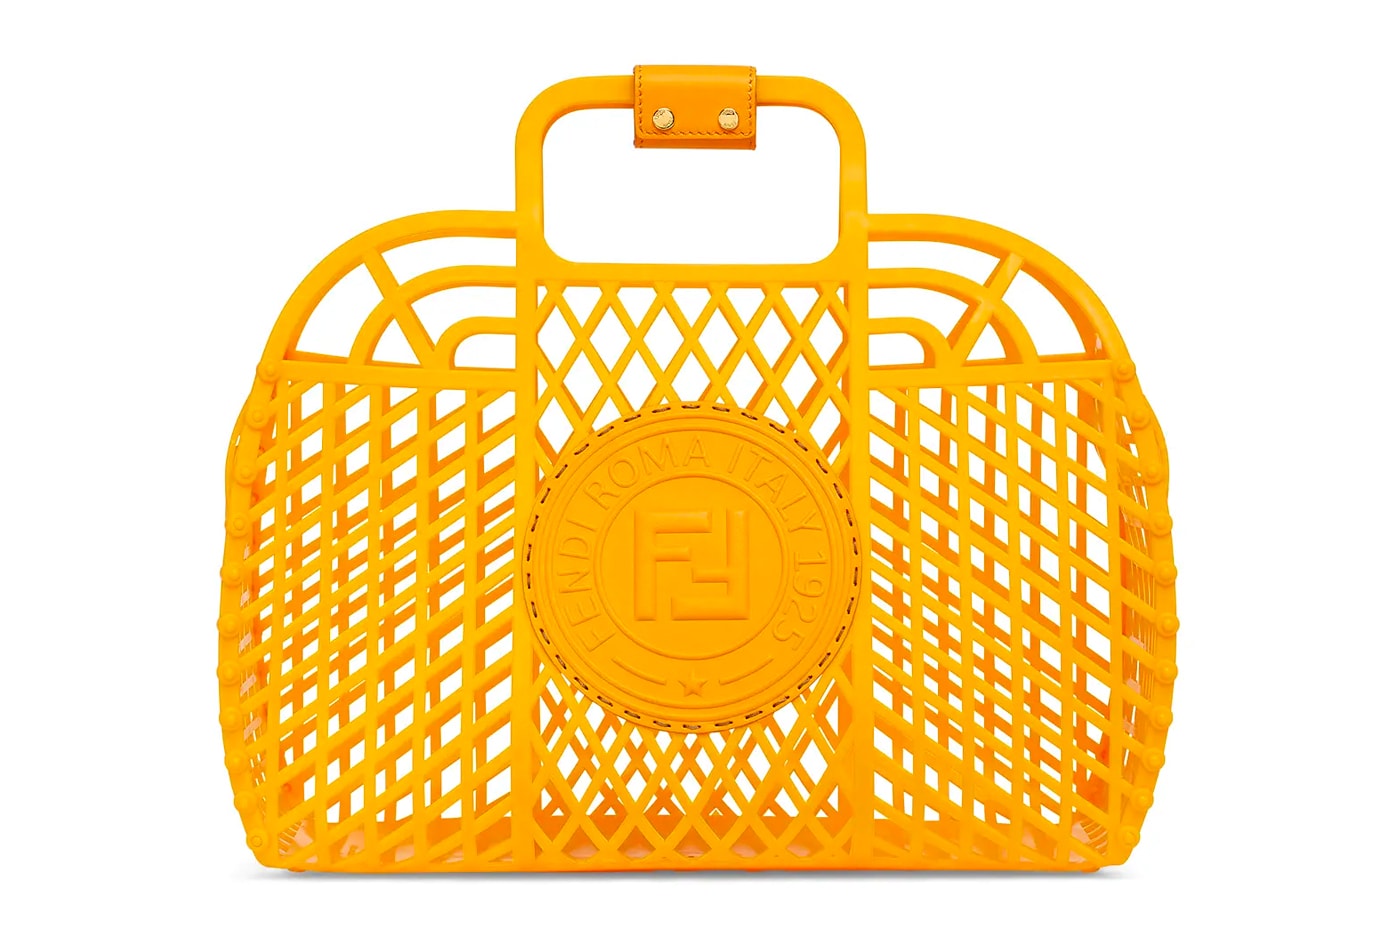 Fendi Recycled Plastic BASKET Handbag Release 1990s nostalgia shopping basket 